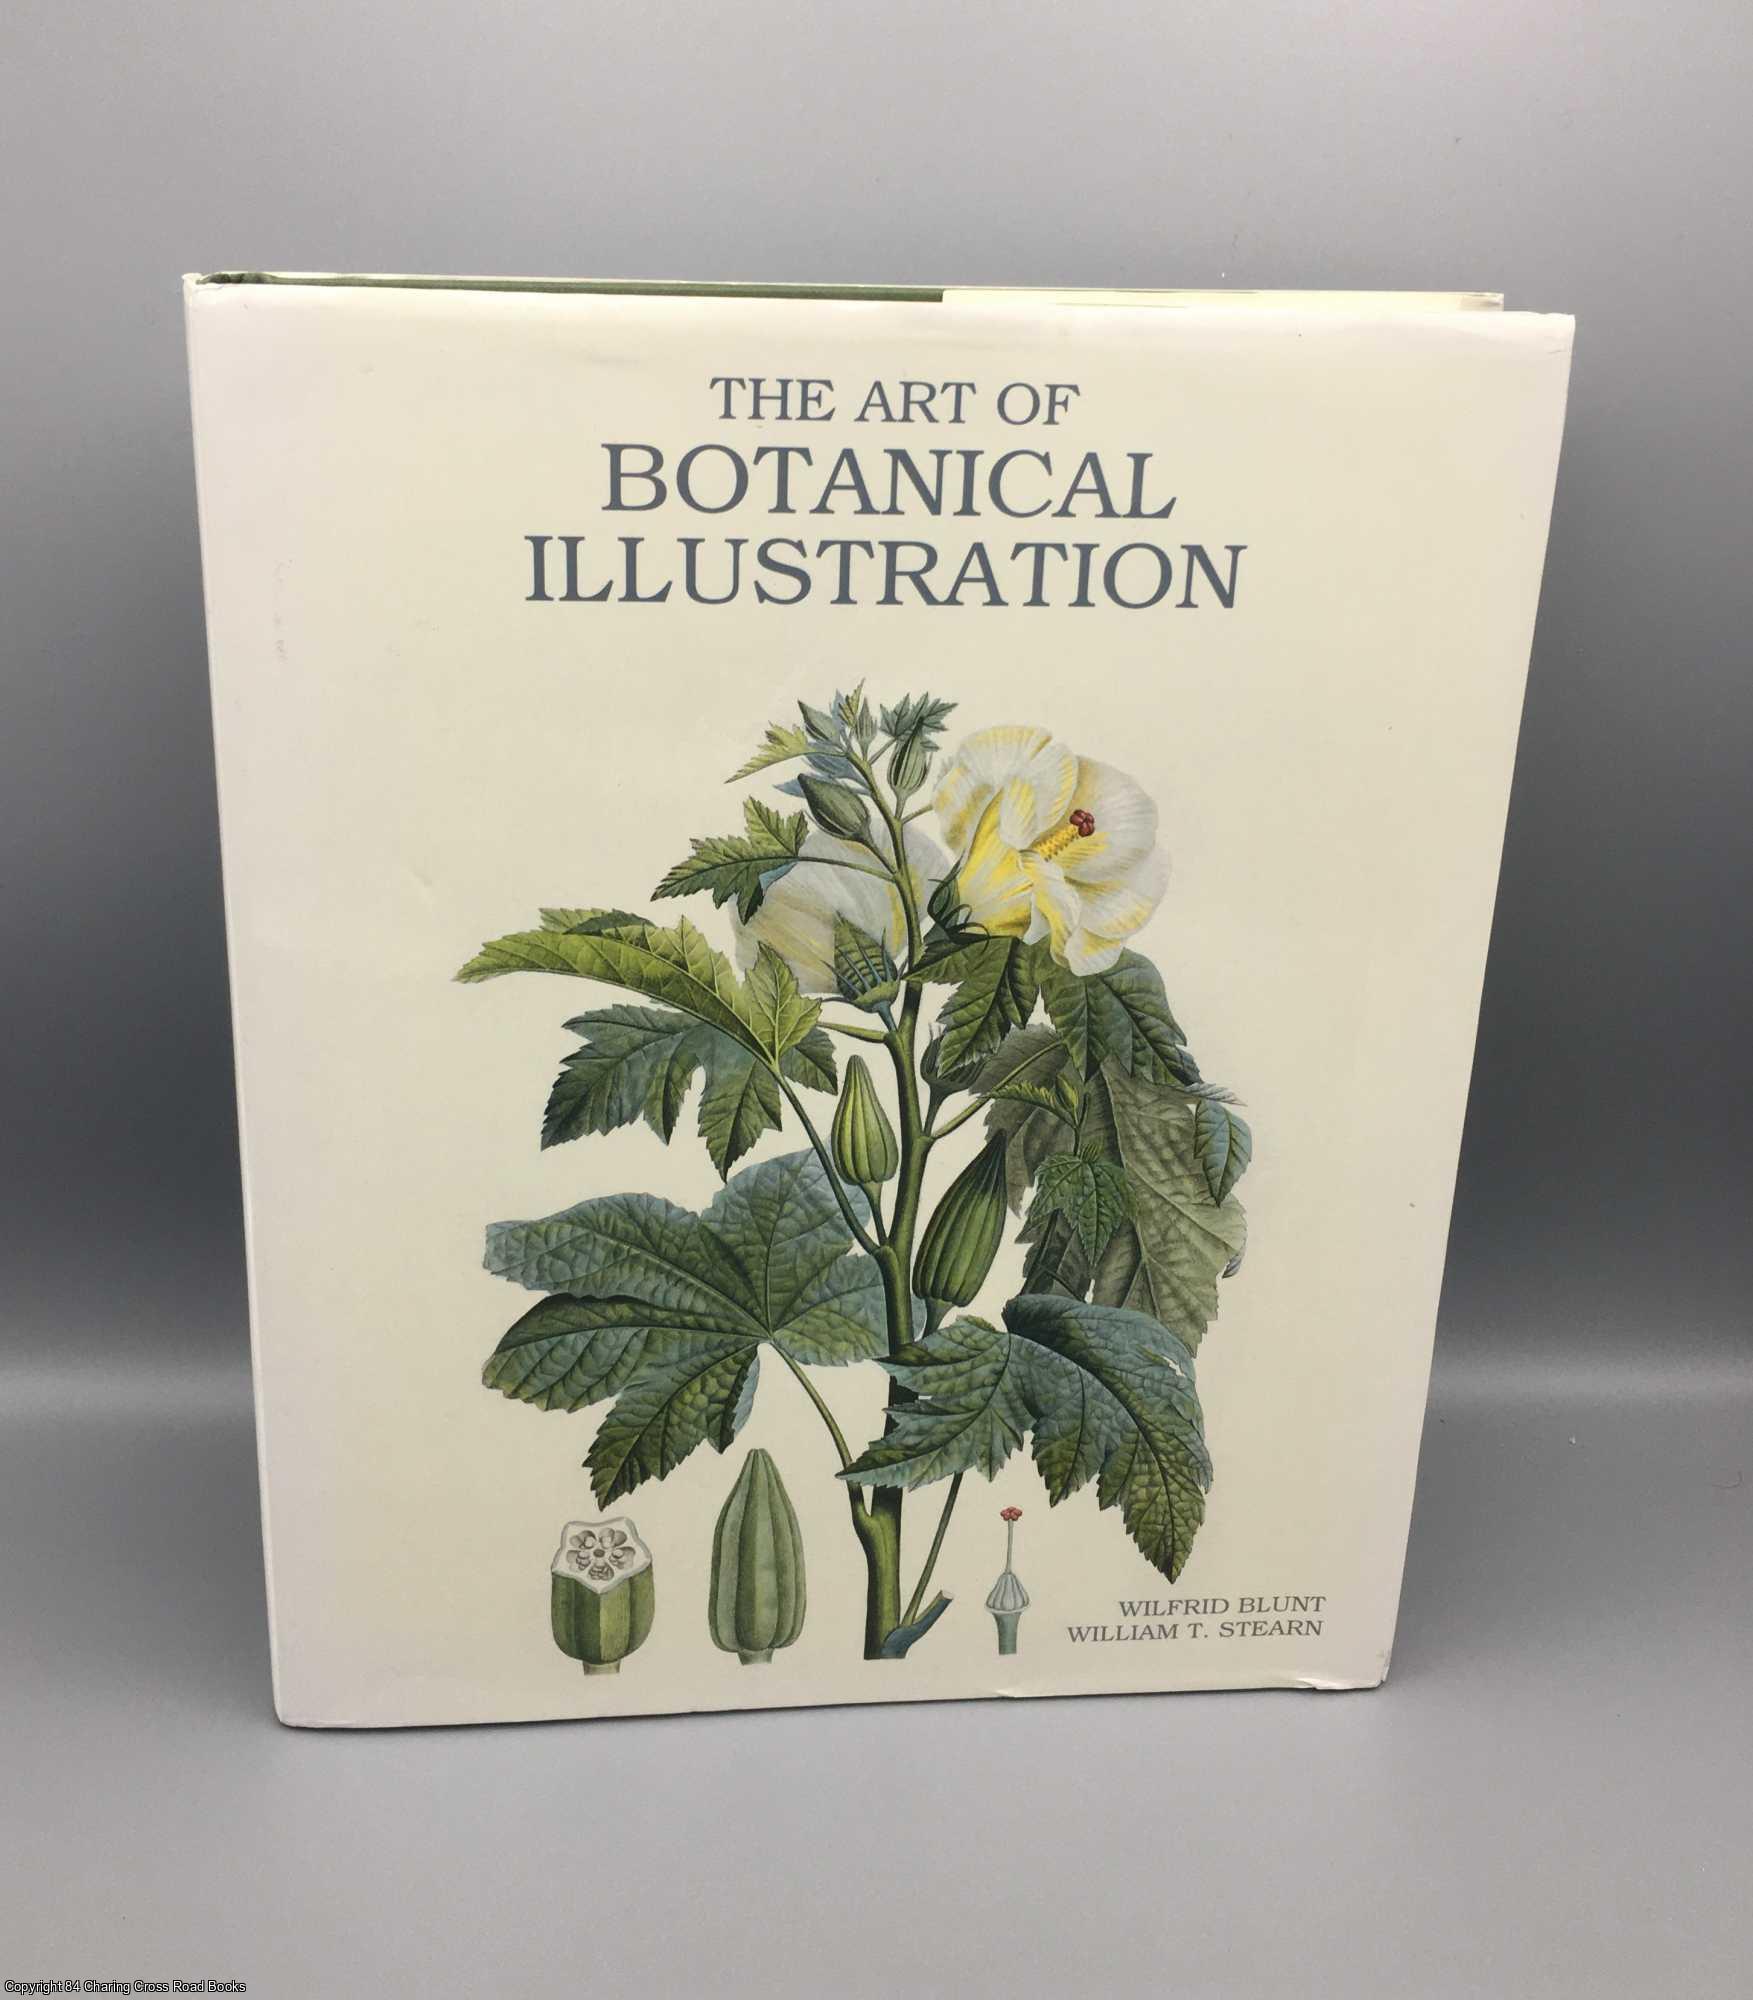 Blunt, Wilfrid, Stern, William T. - The Art of Botanical Illustration